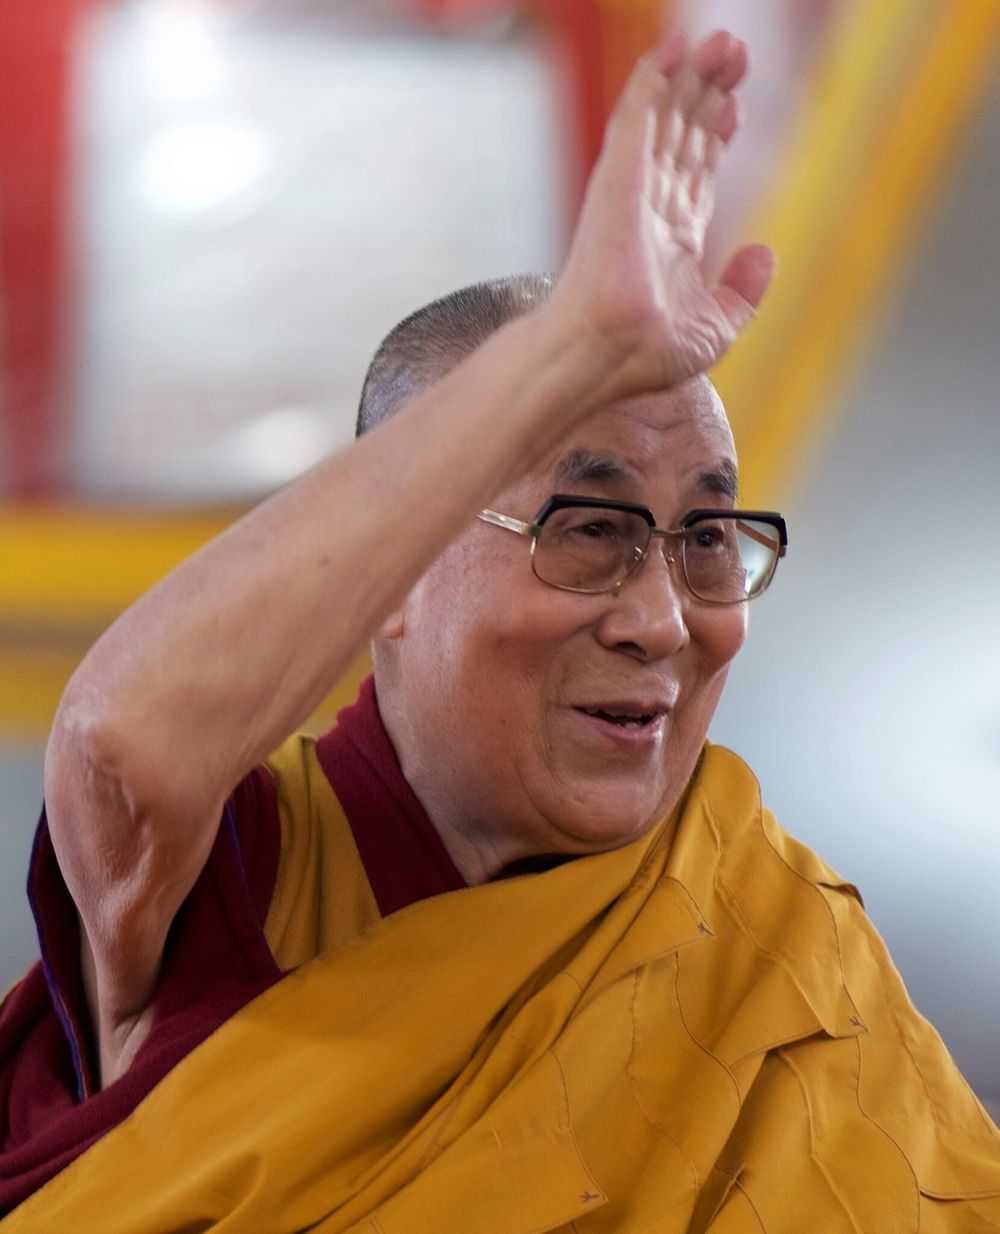 Famous Dalai Lama Quotes